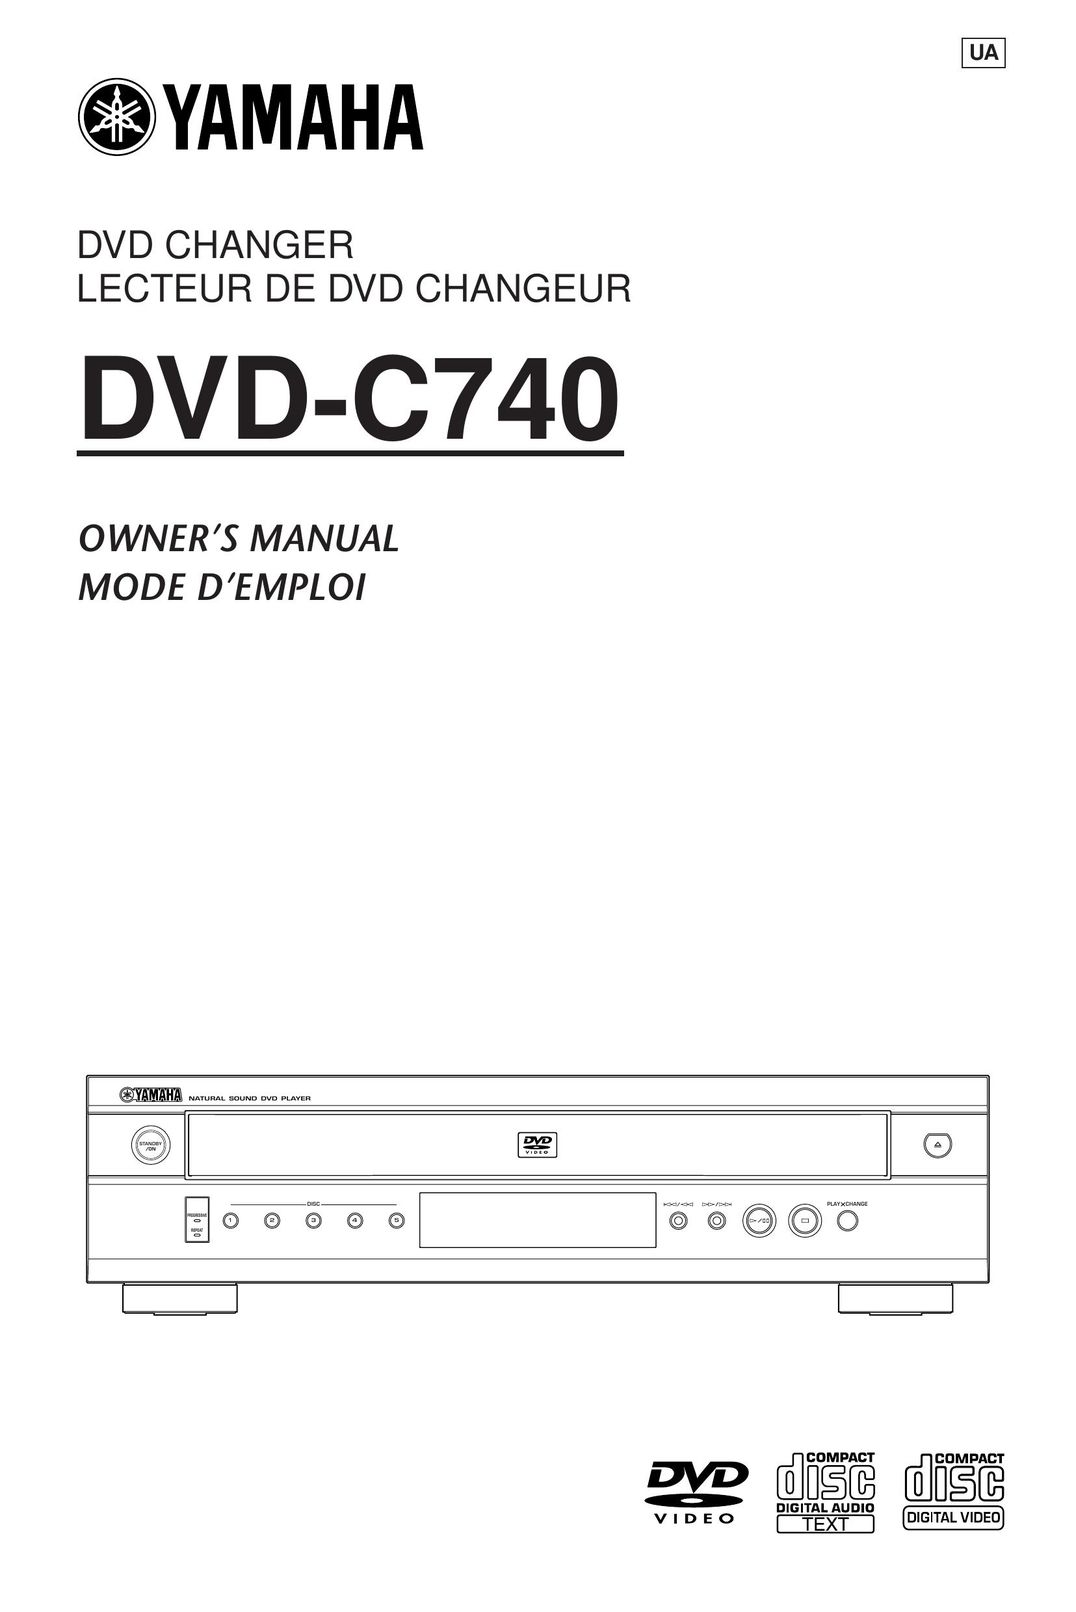 Yamaha DVD CHANGER DVD Player User Manual